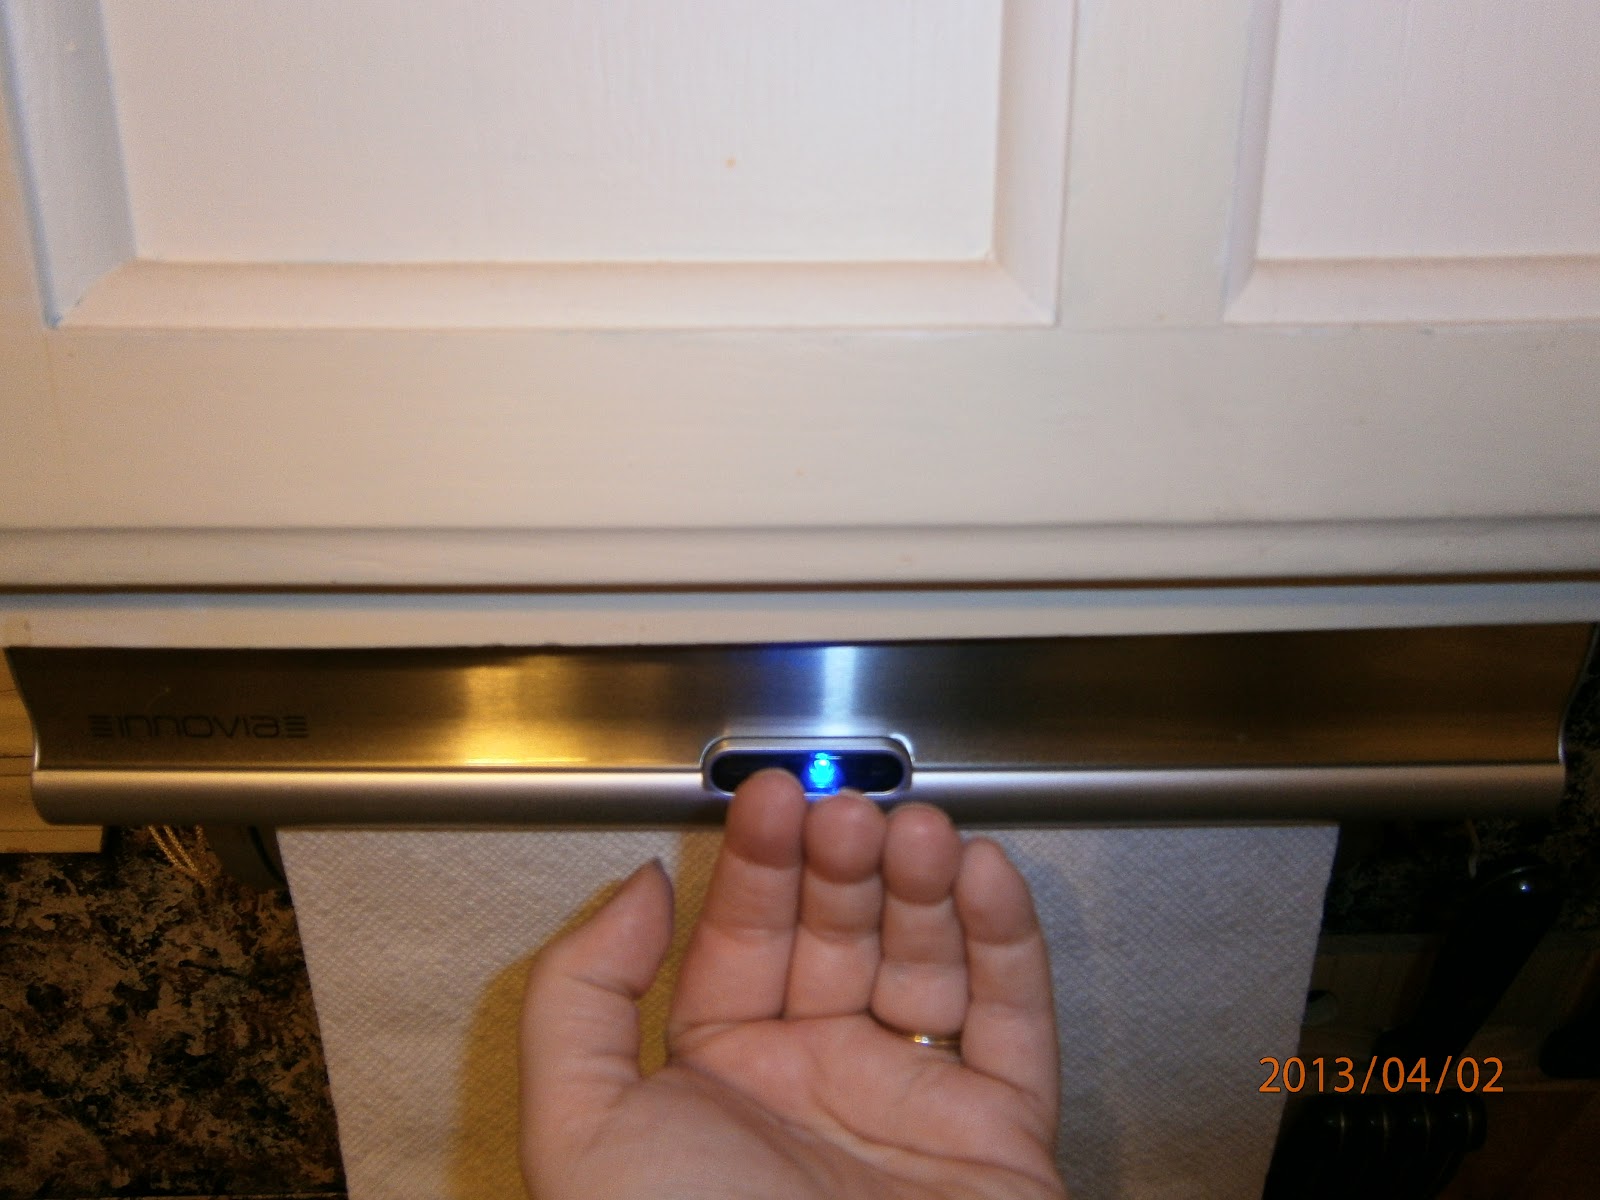 Innovia Countertop Paper Towel Dispenser Review 